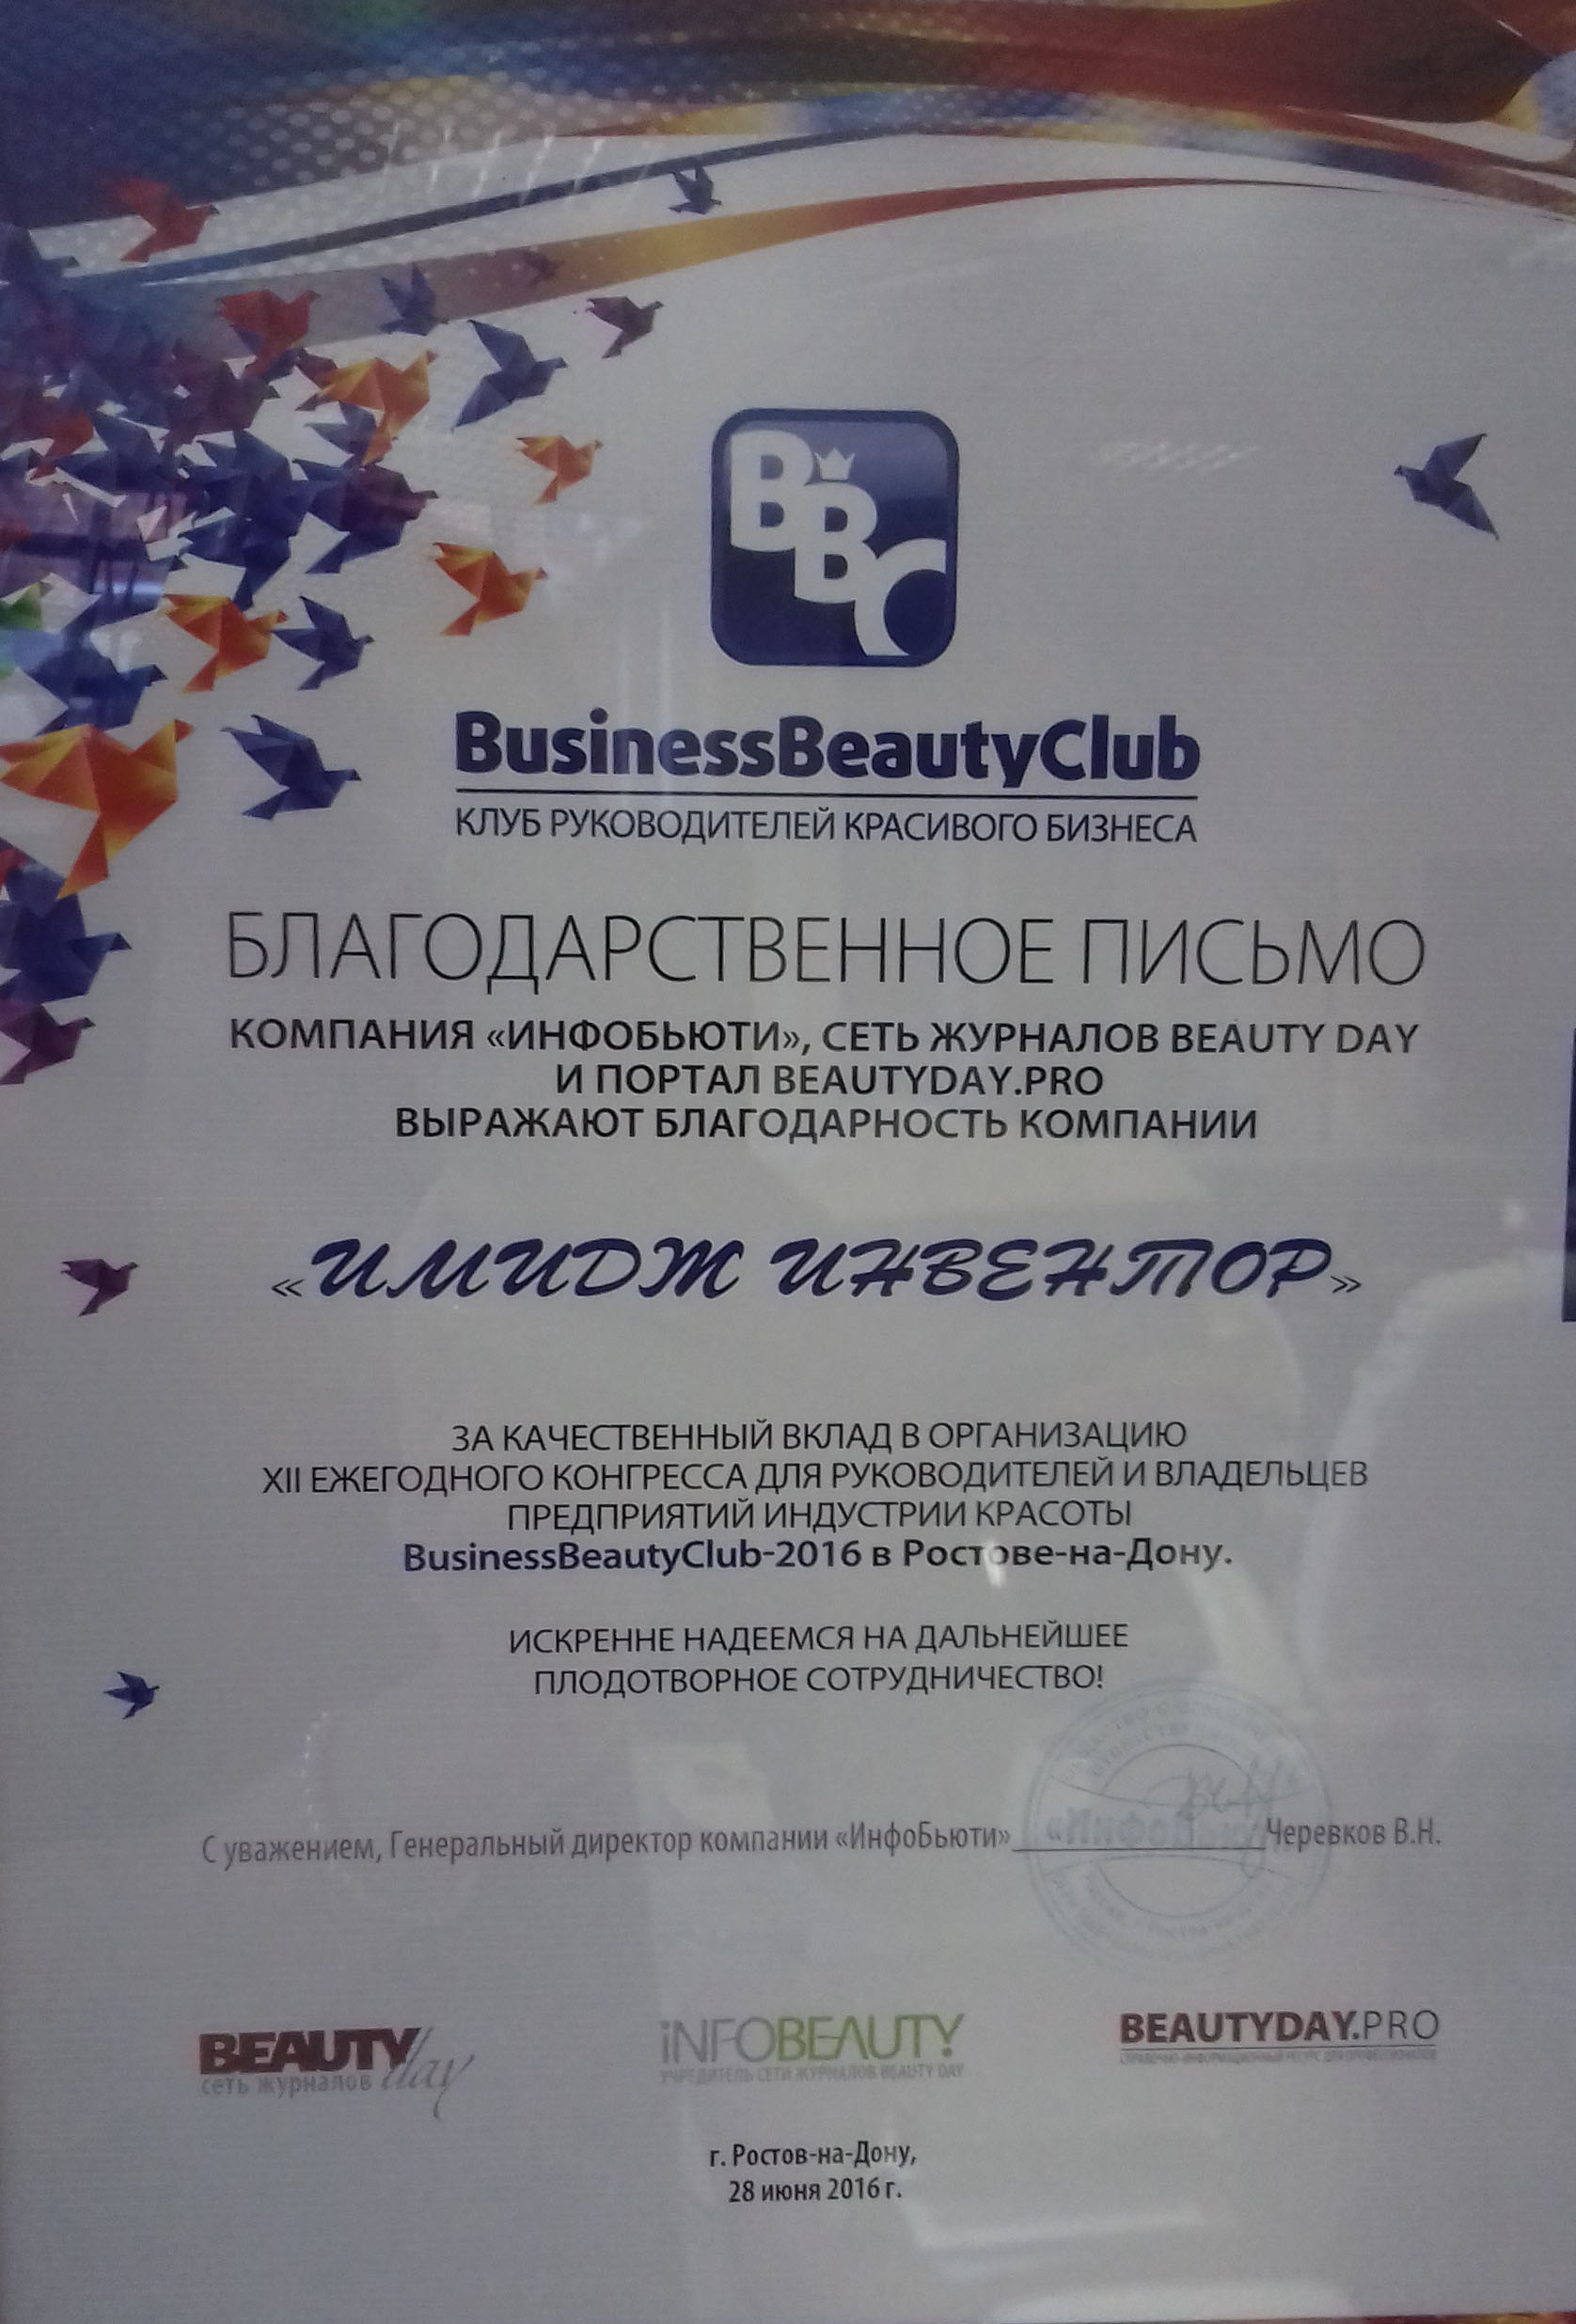 BusinessBeautyClub-2016